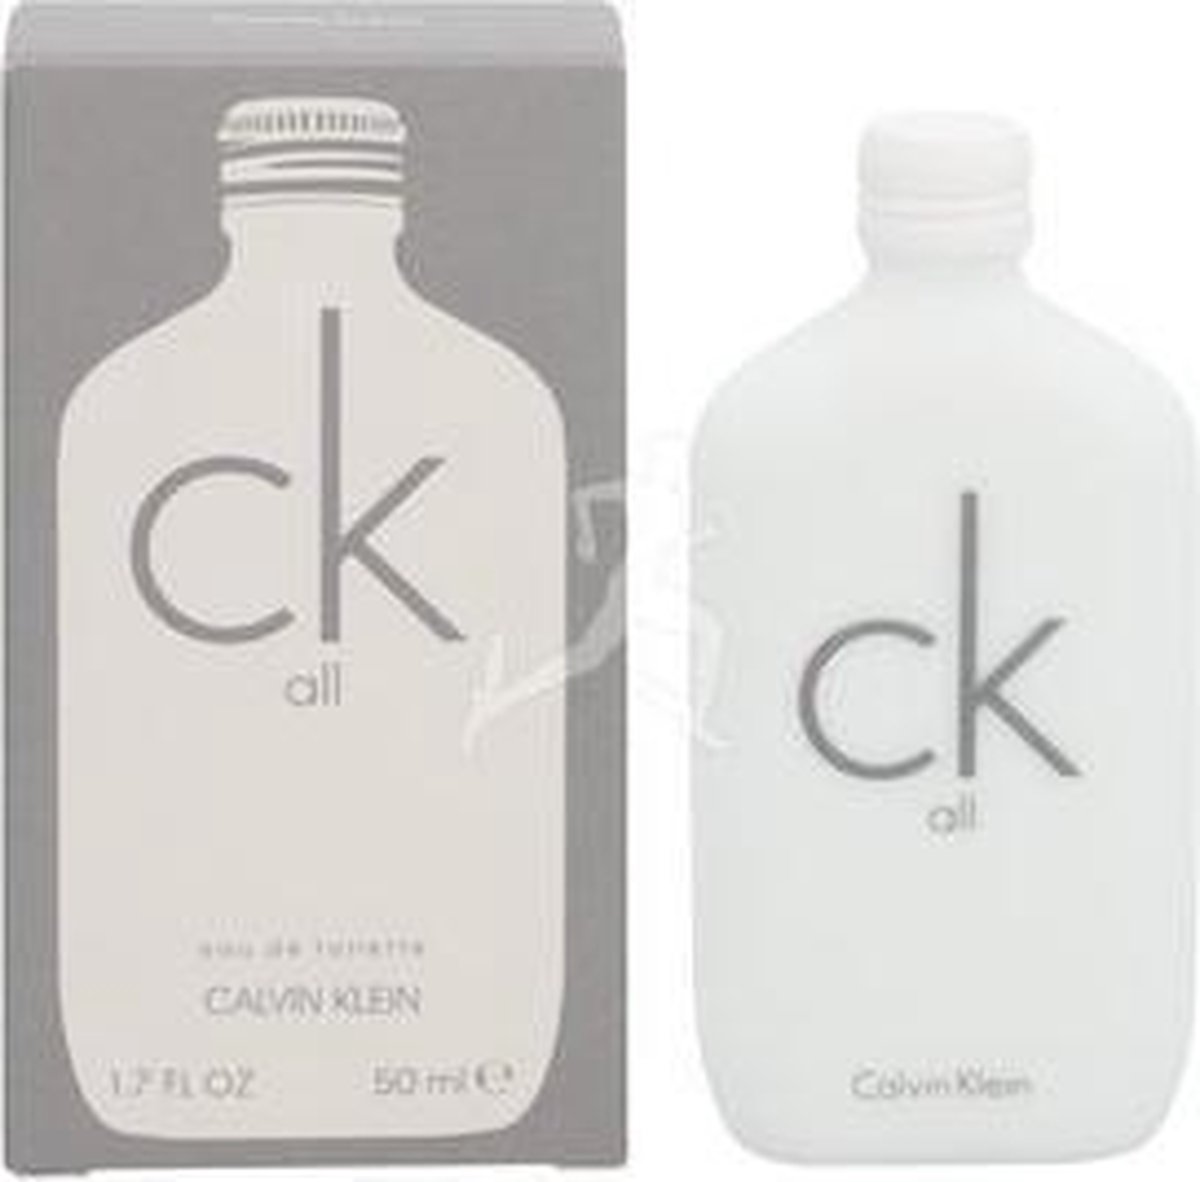 accumuleren Opschudding verwijderen Calvin Klein CK All Eau de Toilette 50ml Spray | bol.com